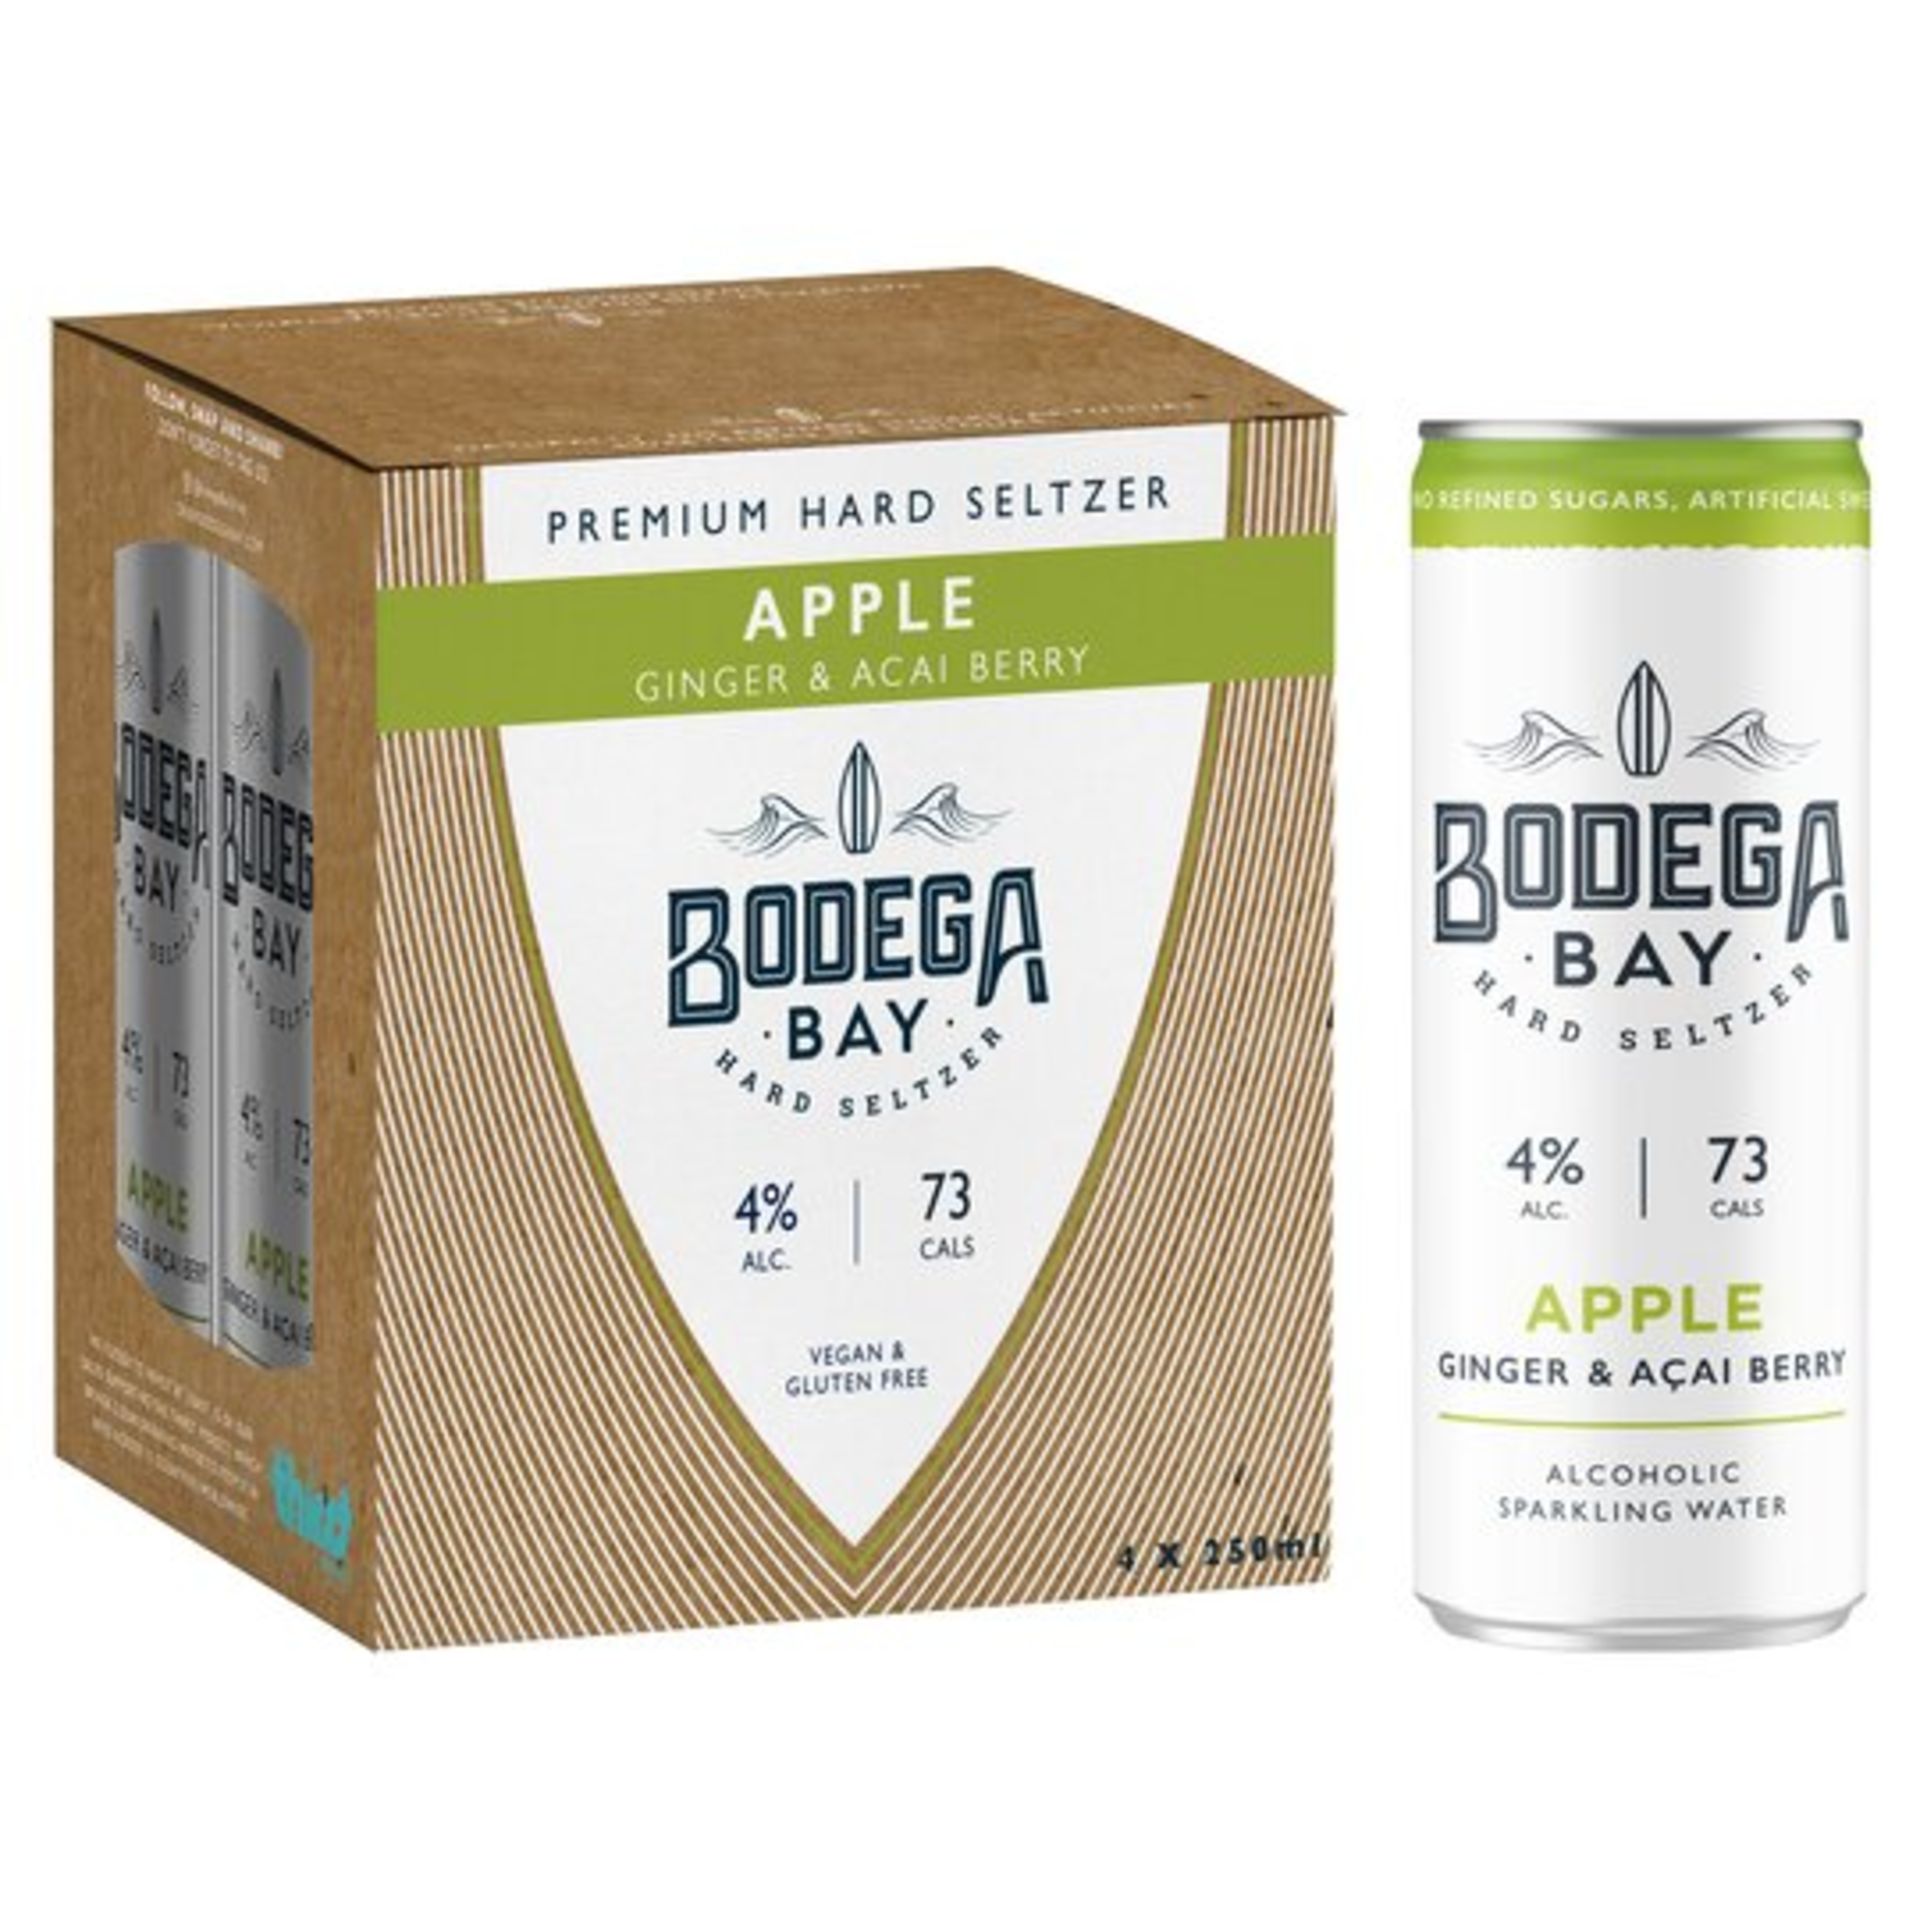 24 x Bodega Bay Hard Seltzer 250ml Alcoholic Sparkling Water Drinks - Apple Ginger & Acai Berry - Image 4 of 11